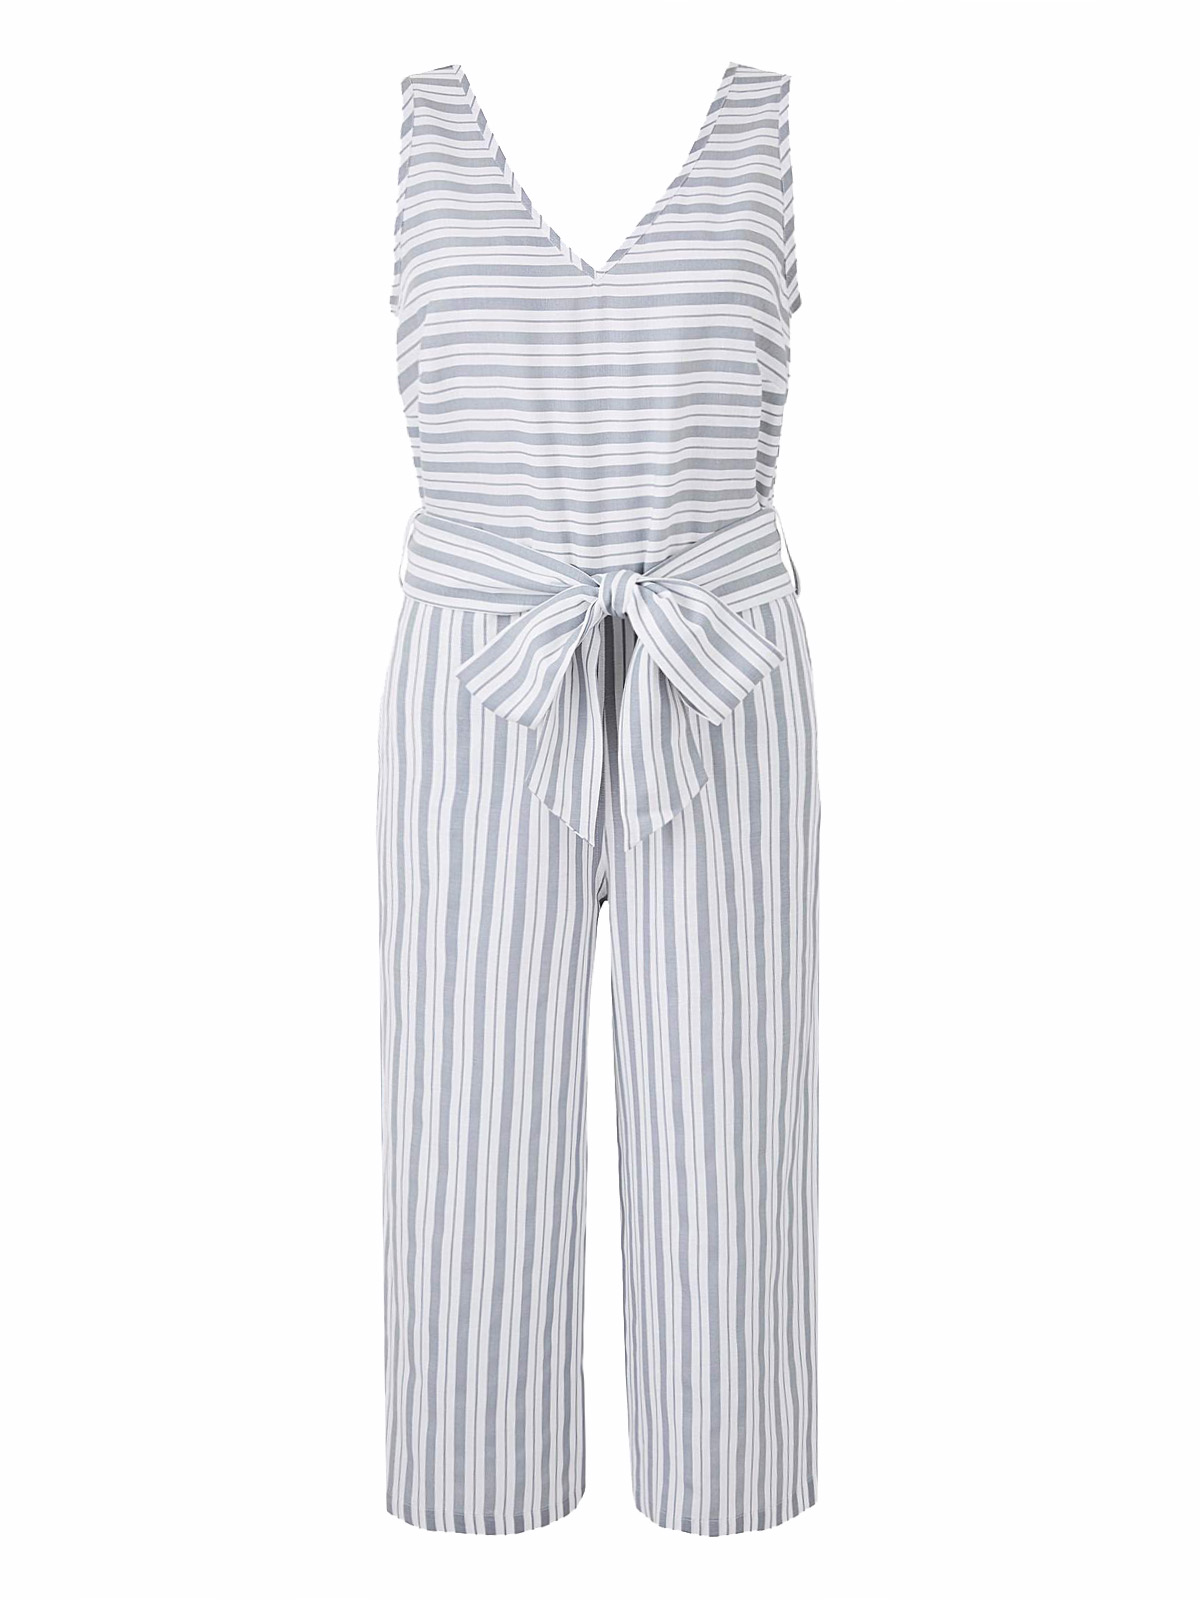 Capsule - - Capsule GREY Linen Blend Striped Jumpsuit - Plus Size 14 to 26